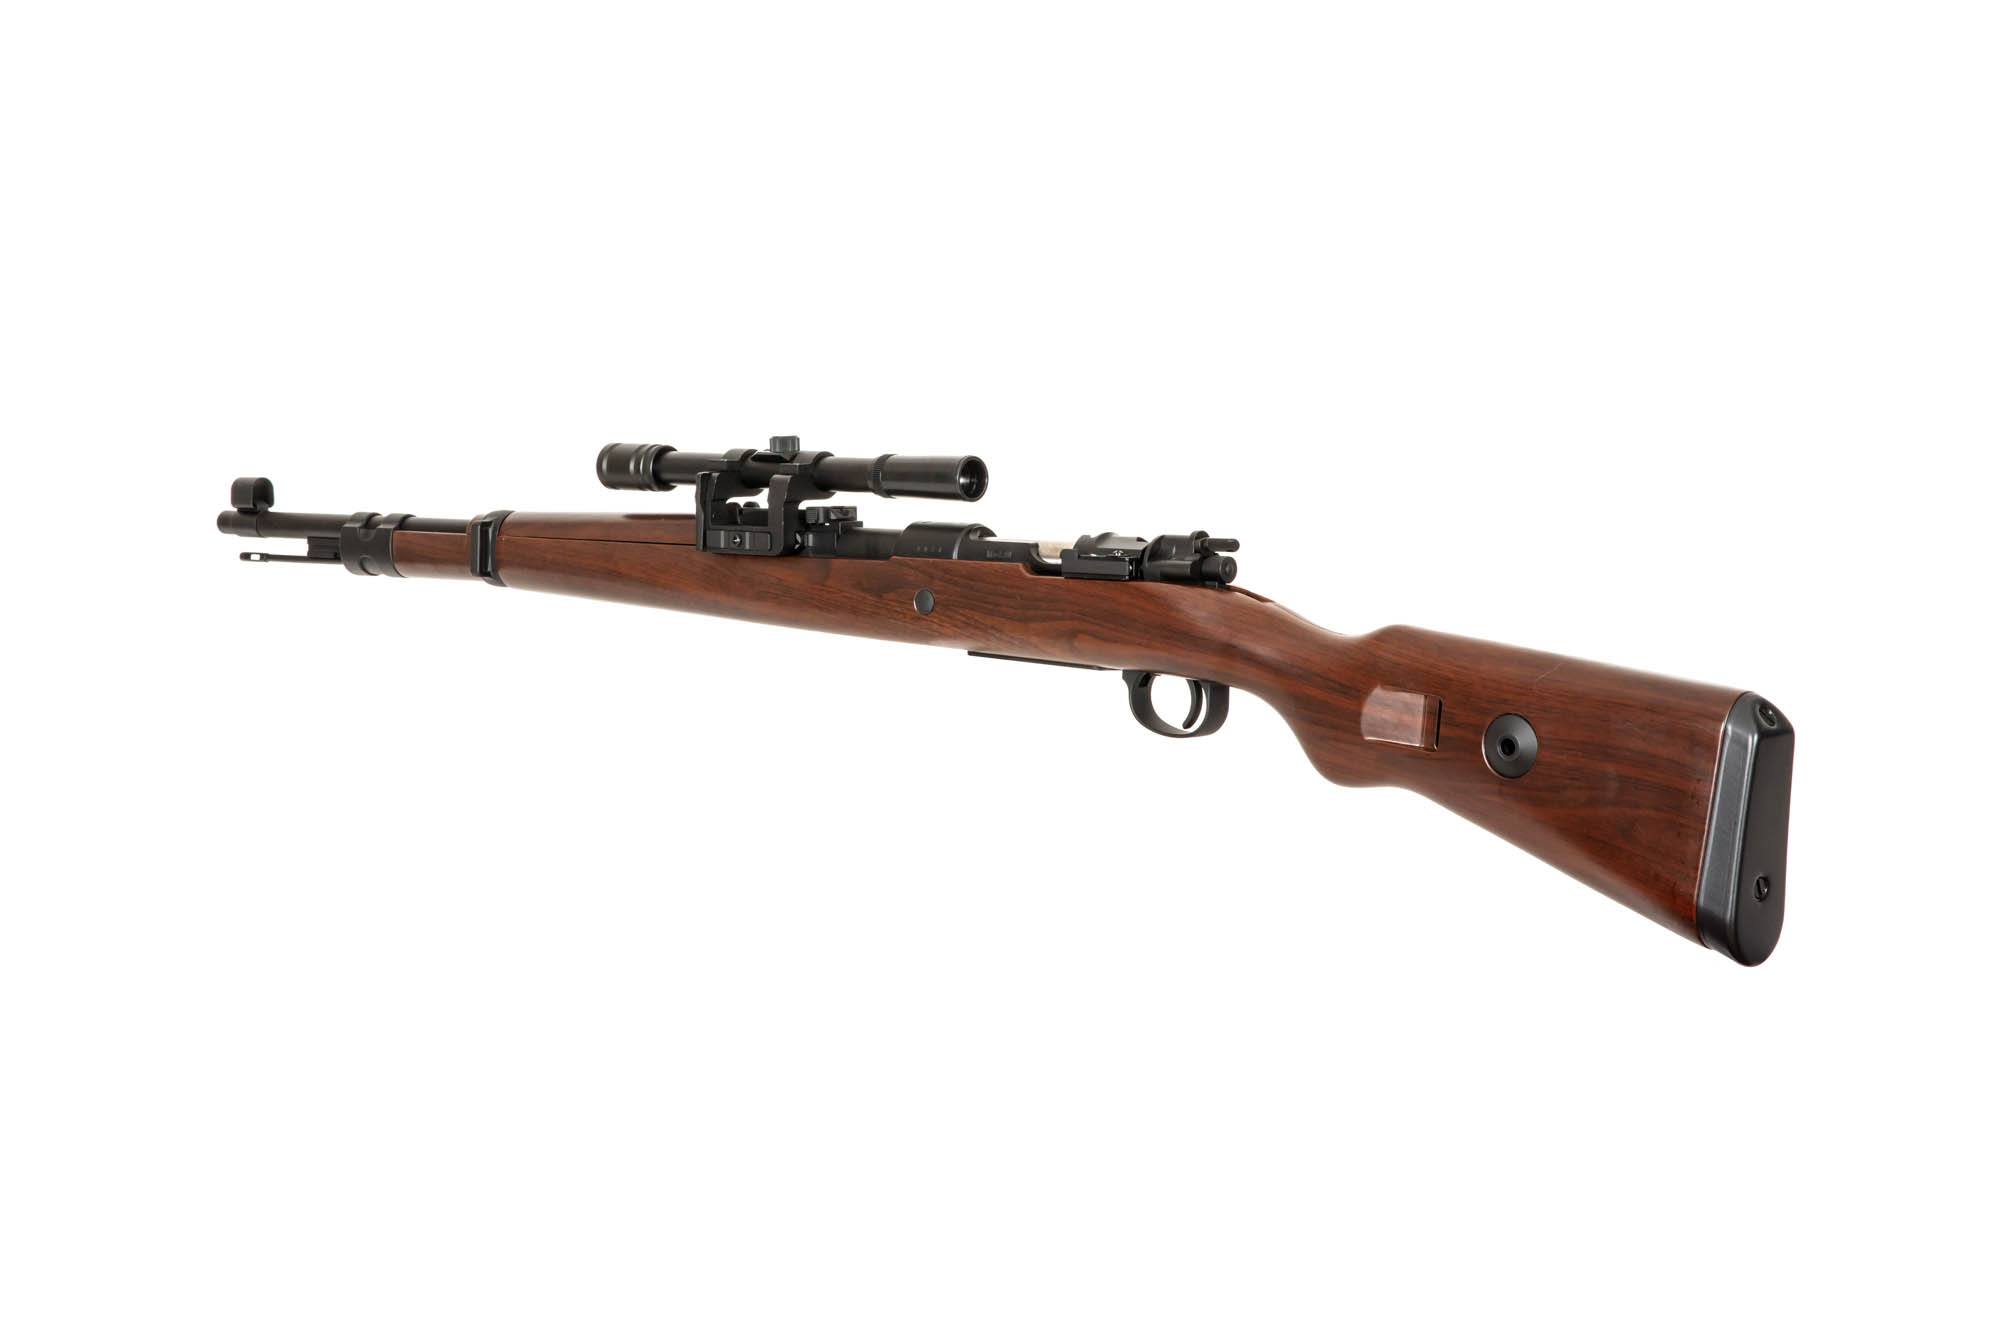 Kar98 Rifle Replica with scope (plastic stock)